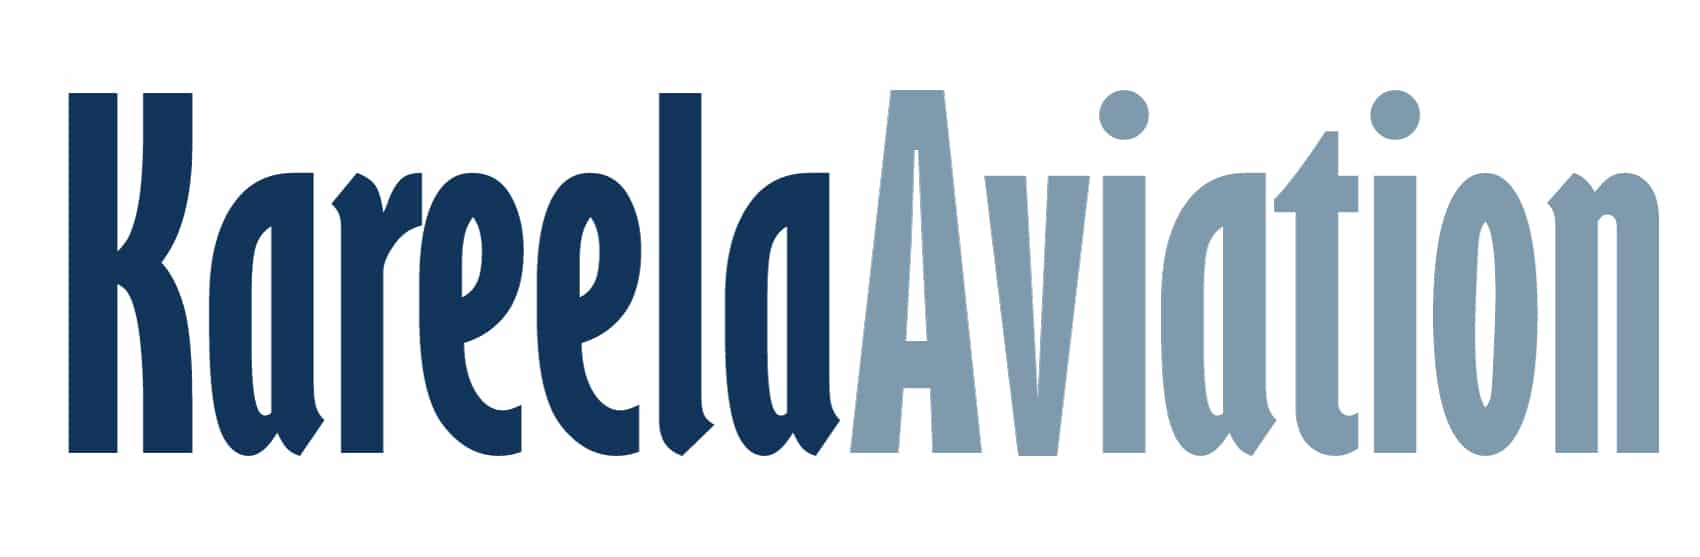 Kareela Aviation Logo on White